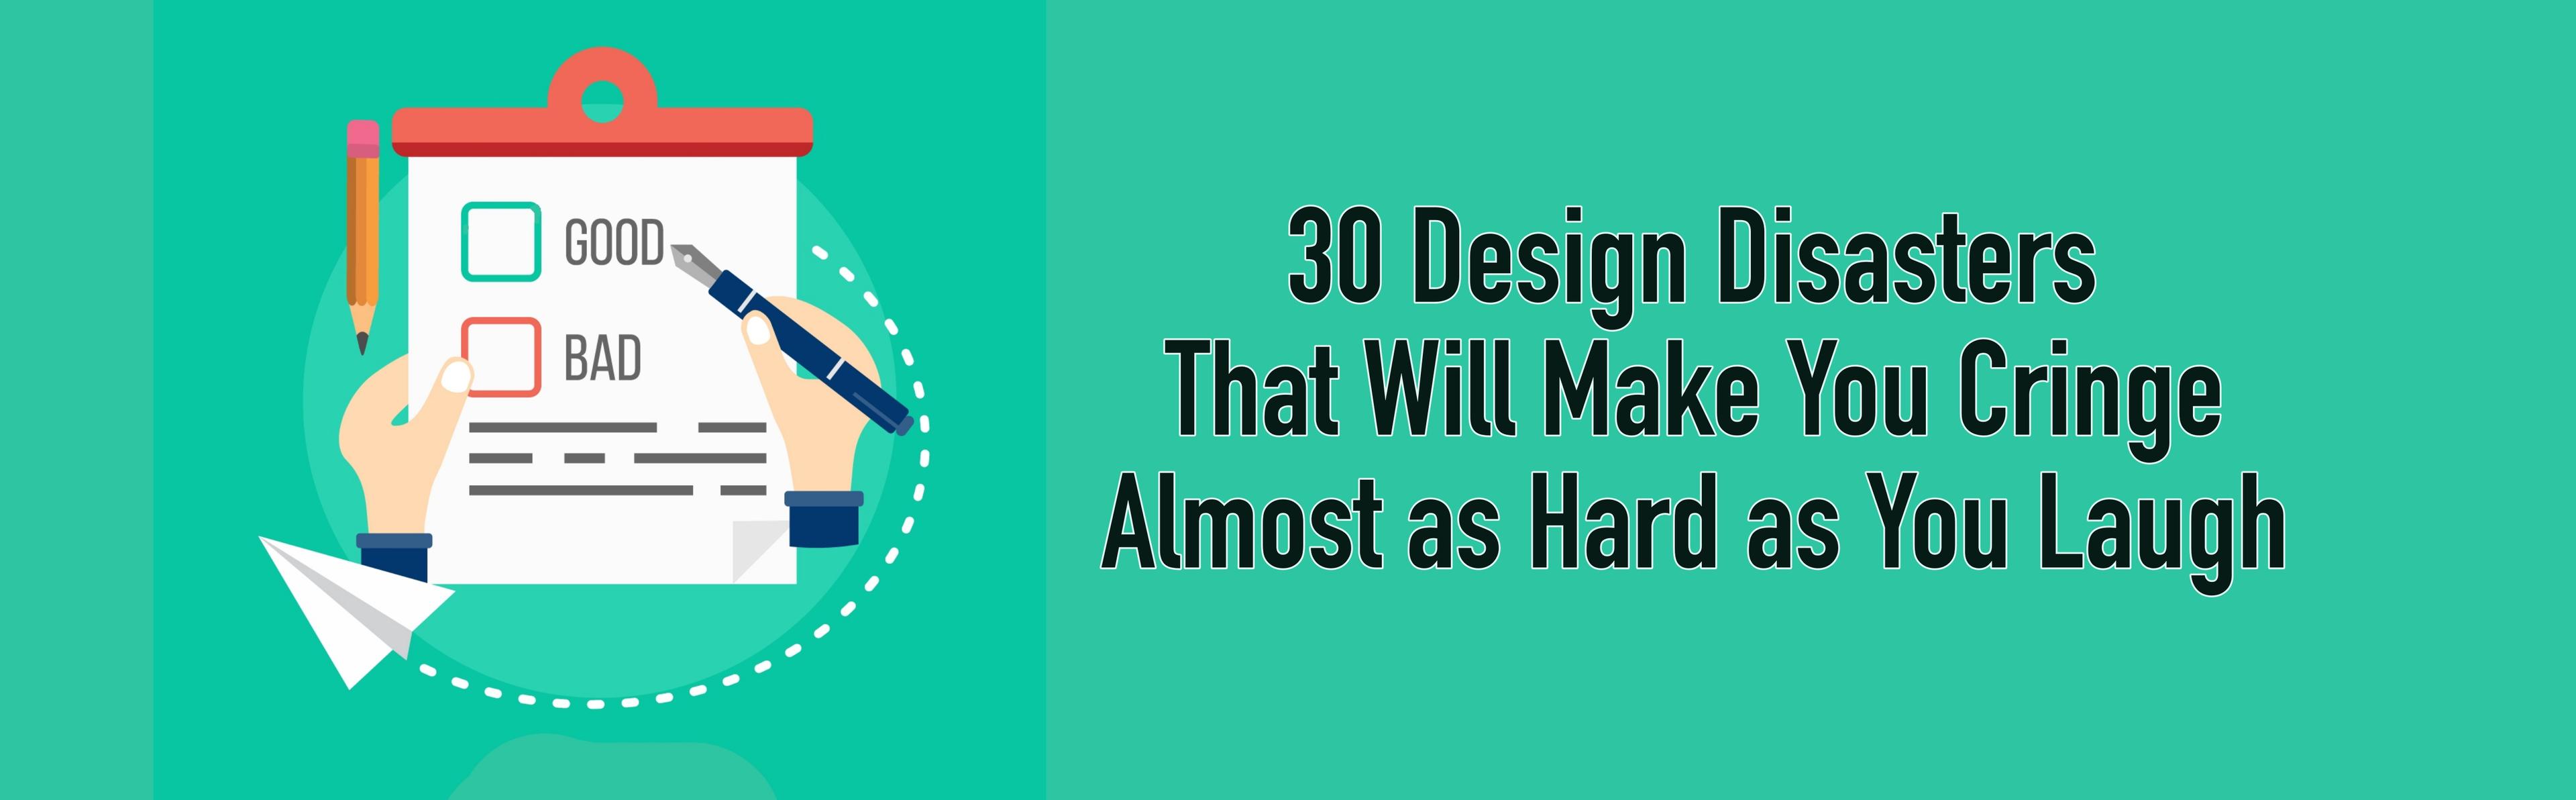 30 Design Disasters That Will Make You Cringe - Superside